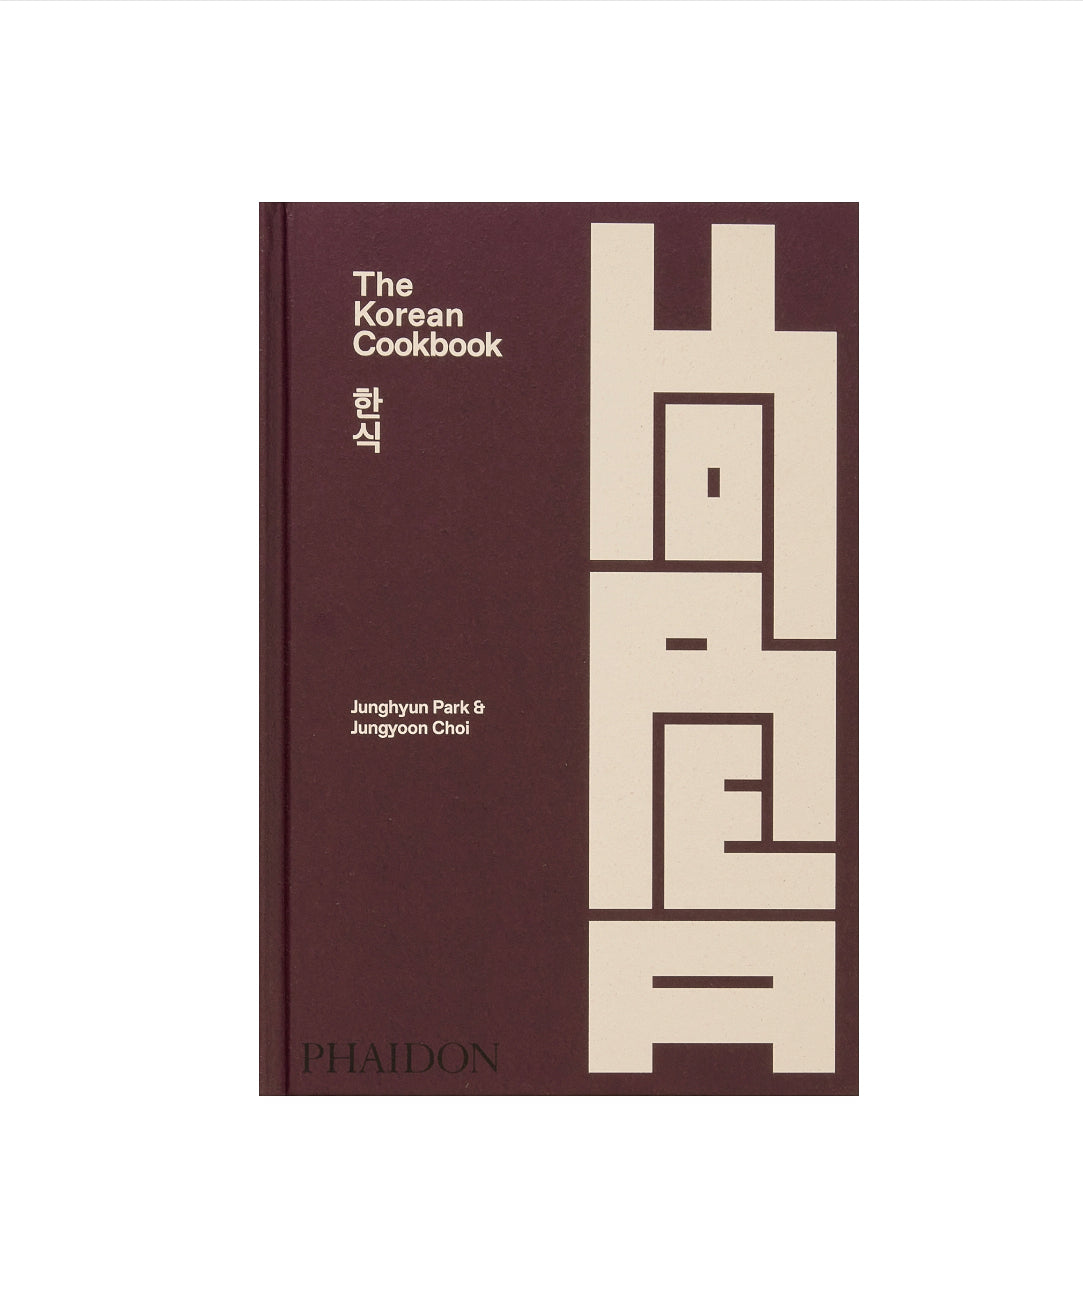 "The Korean Cookbook"